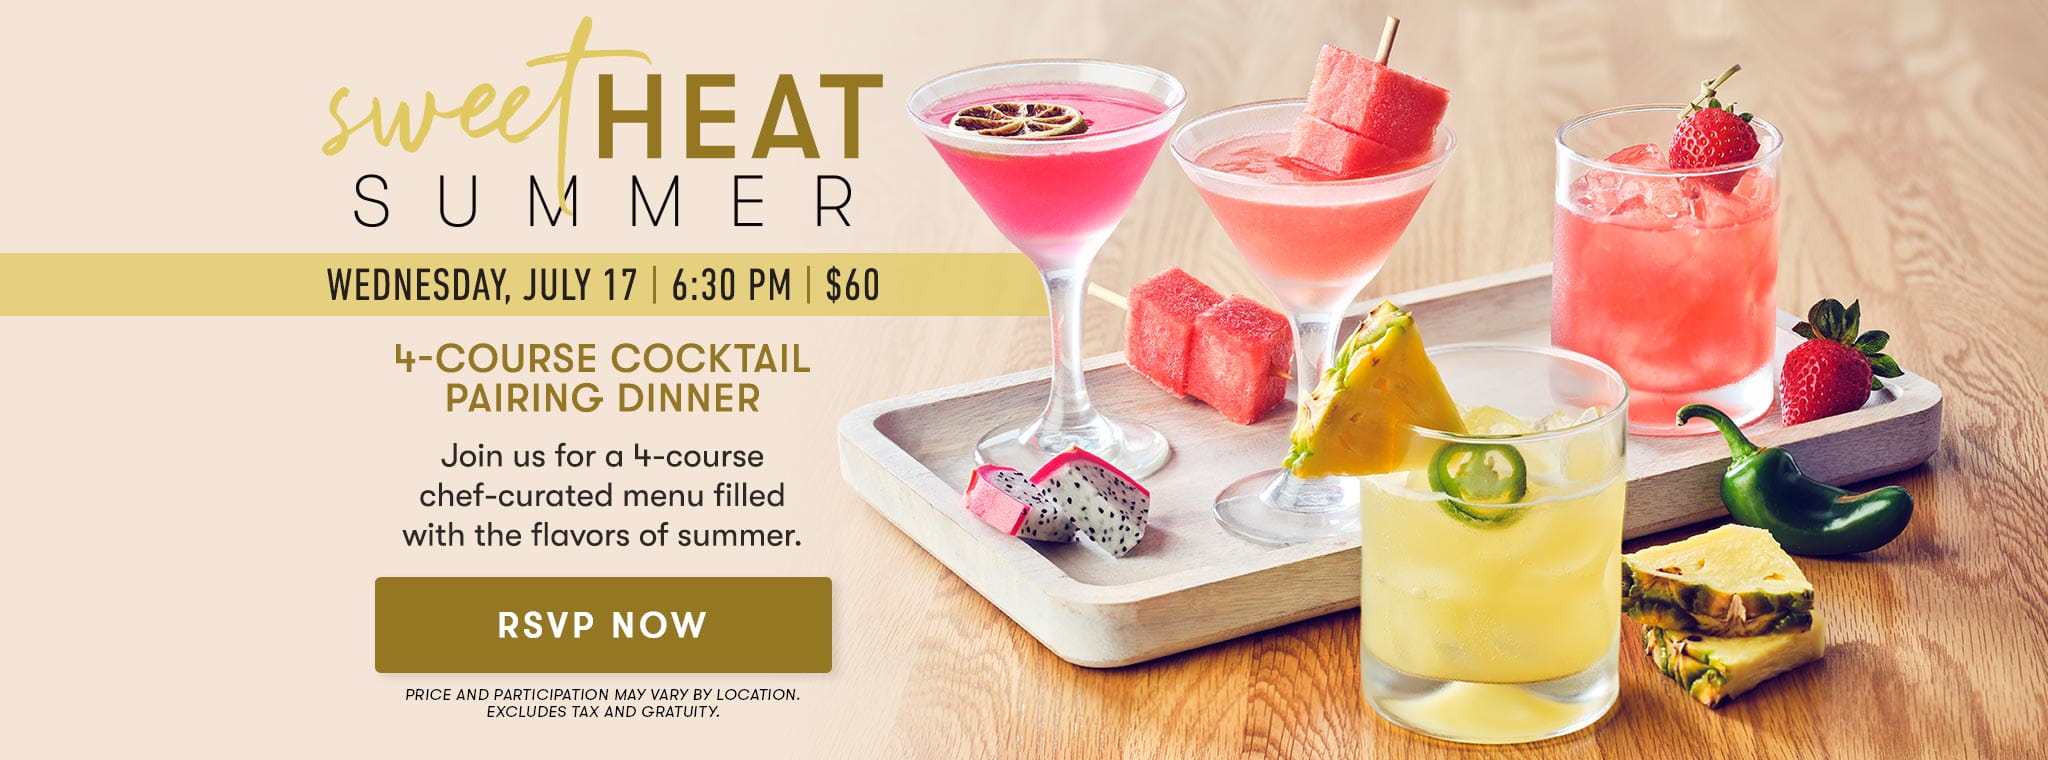 Sweet Heat Summer 4-Course Cocktail Pairing Dinner